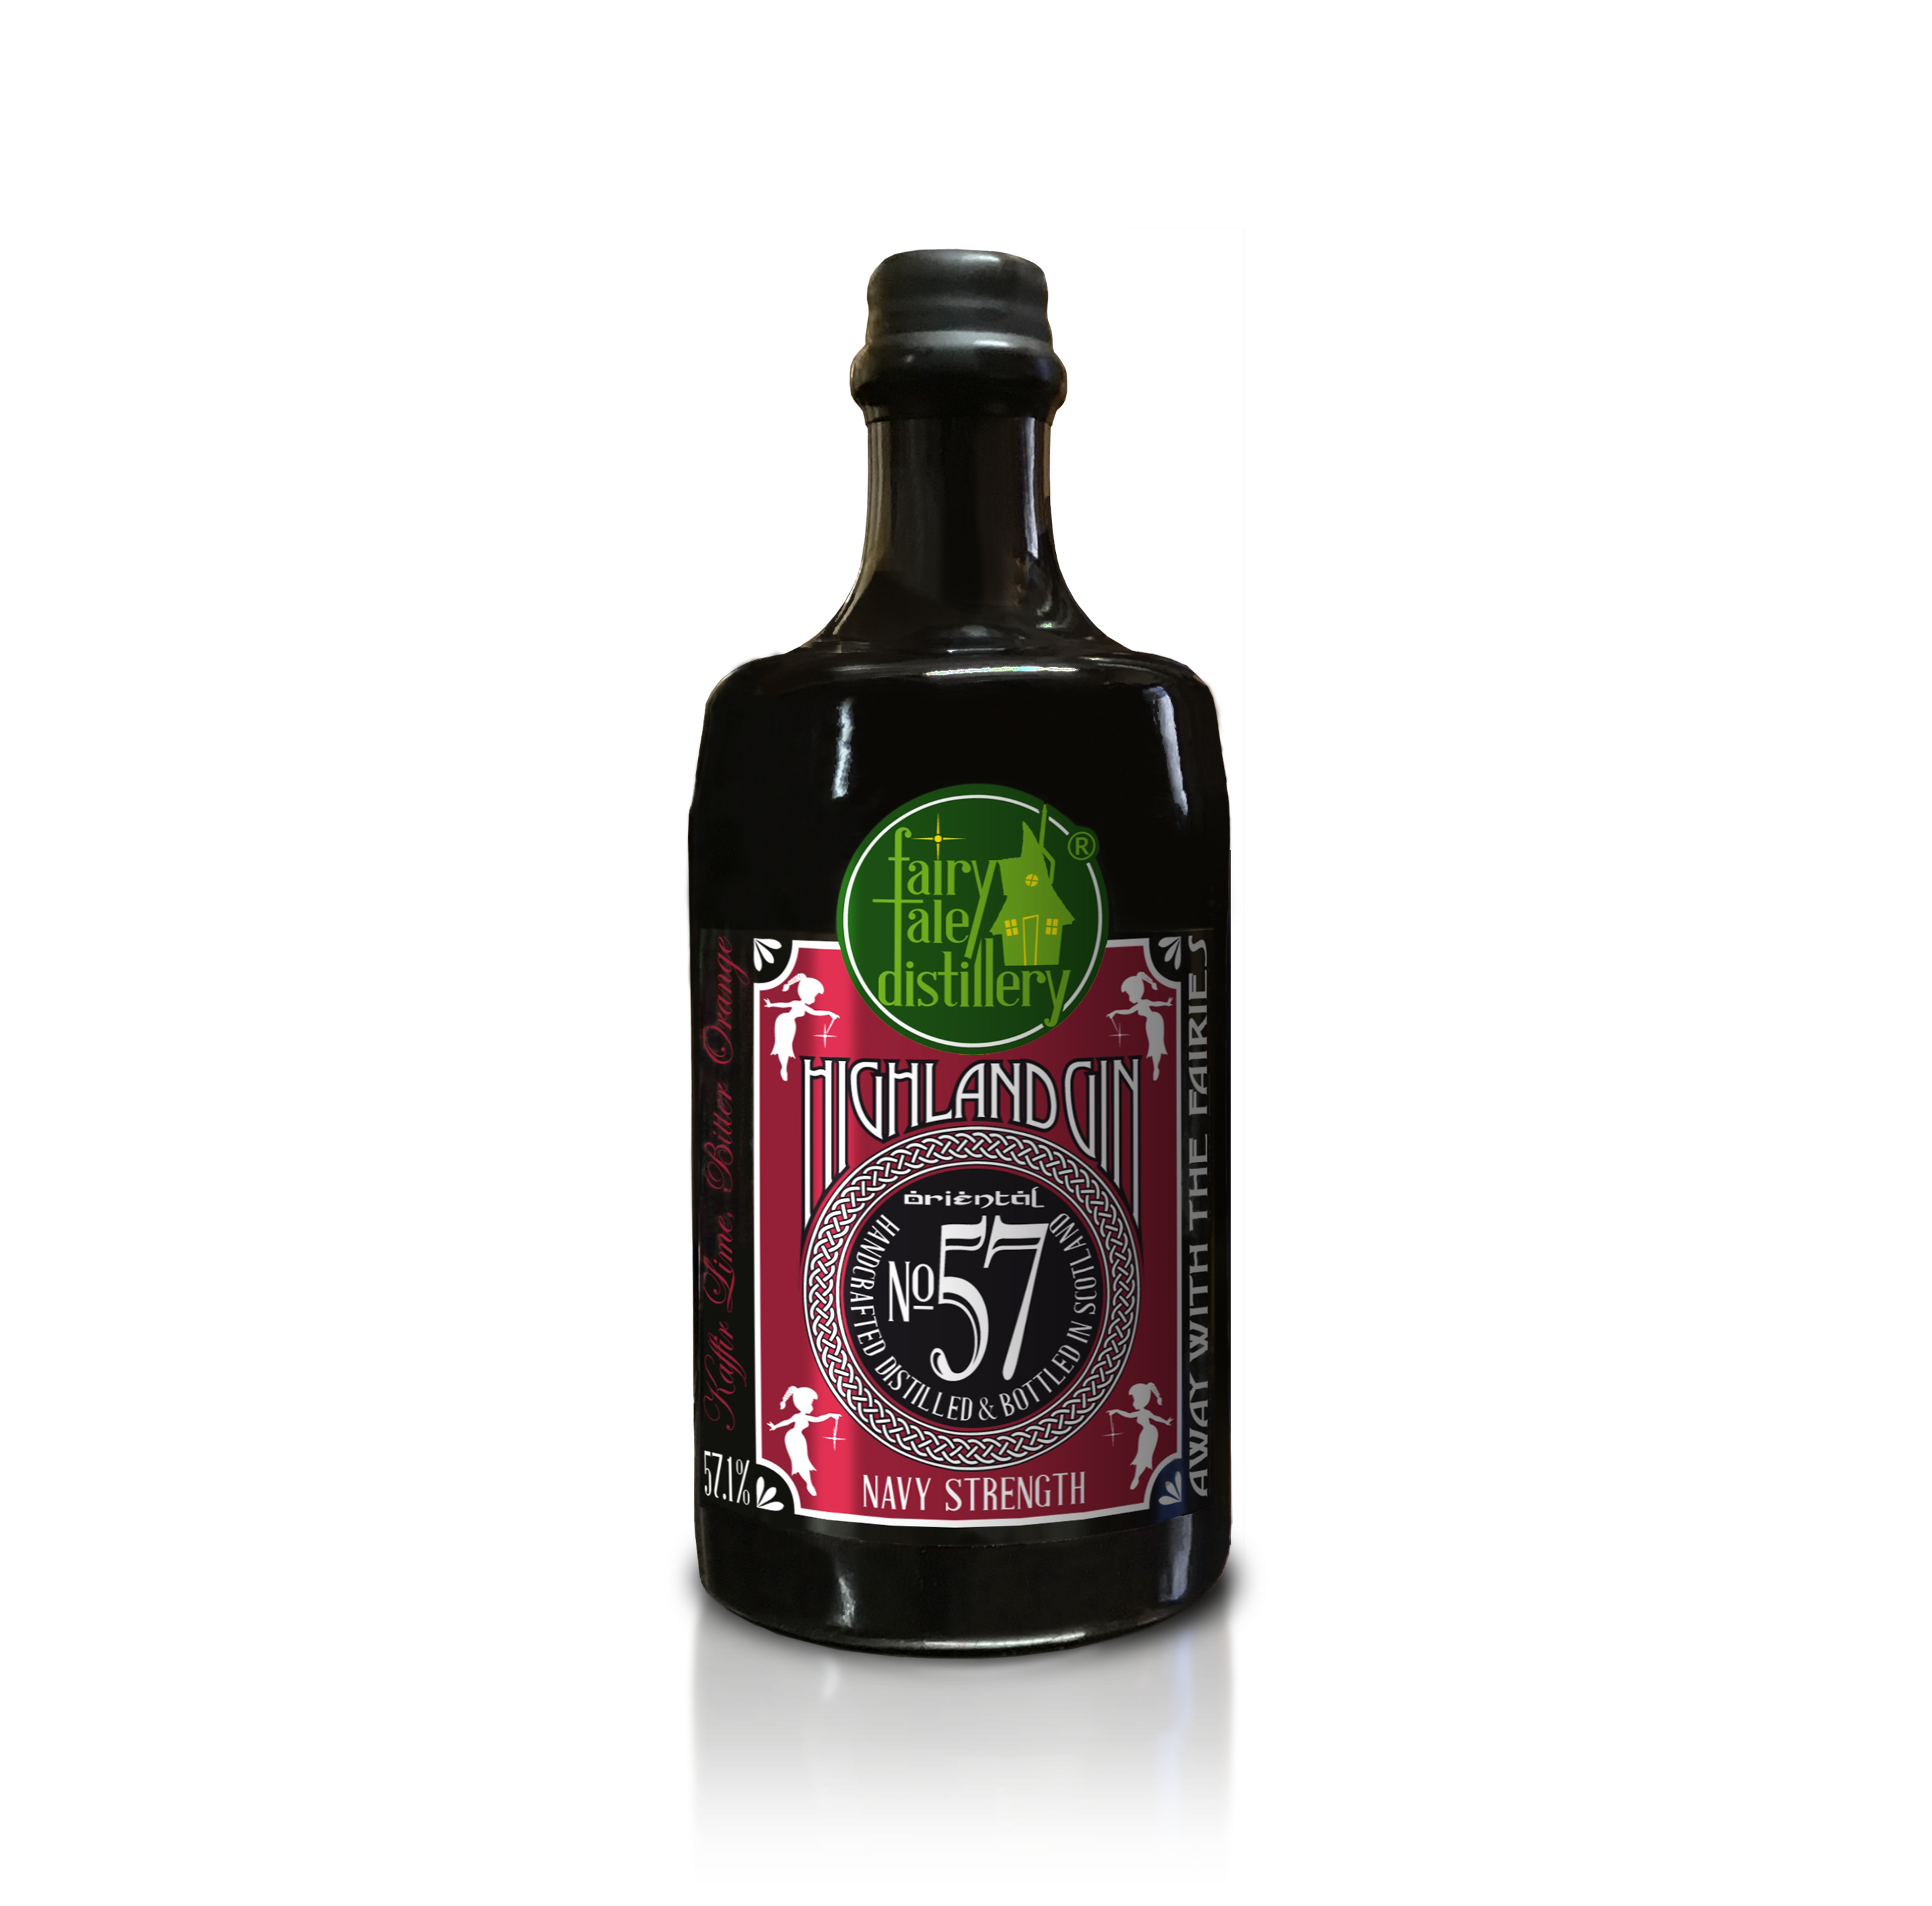 No 57 Oriental Navy Strength Highland Gin bottle 0,7l from Fairytale Distillery